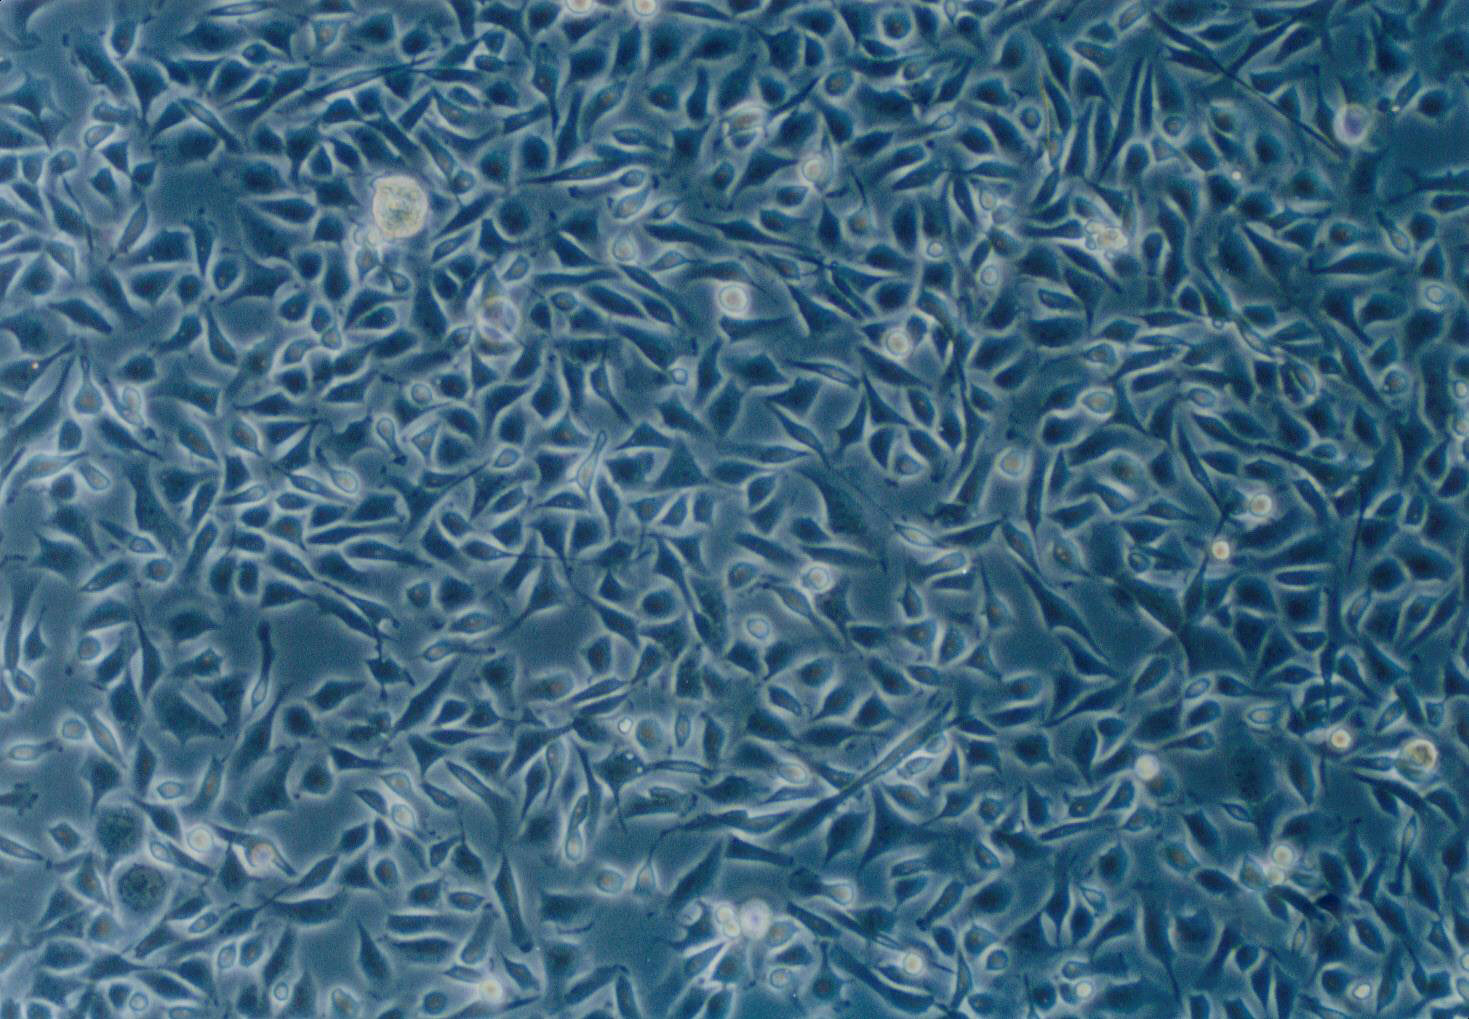 SCC7 epithelioid cells小鼠鳞状细胞癌细胞系,SCC7 epithelioid cells